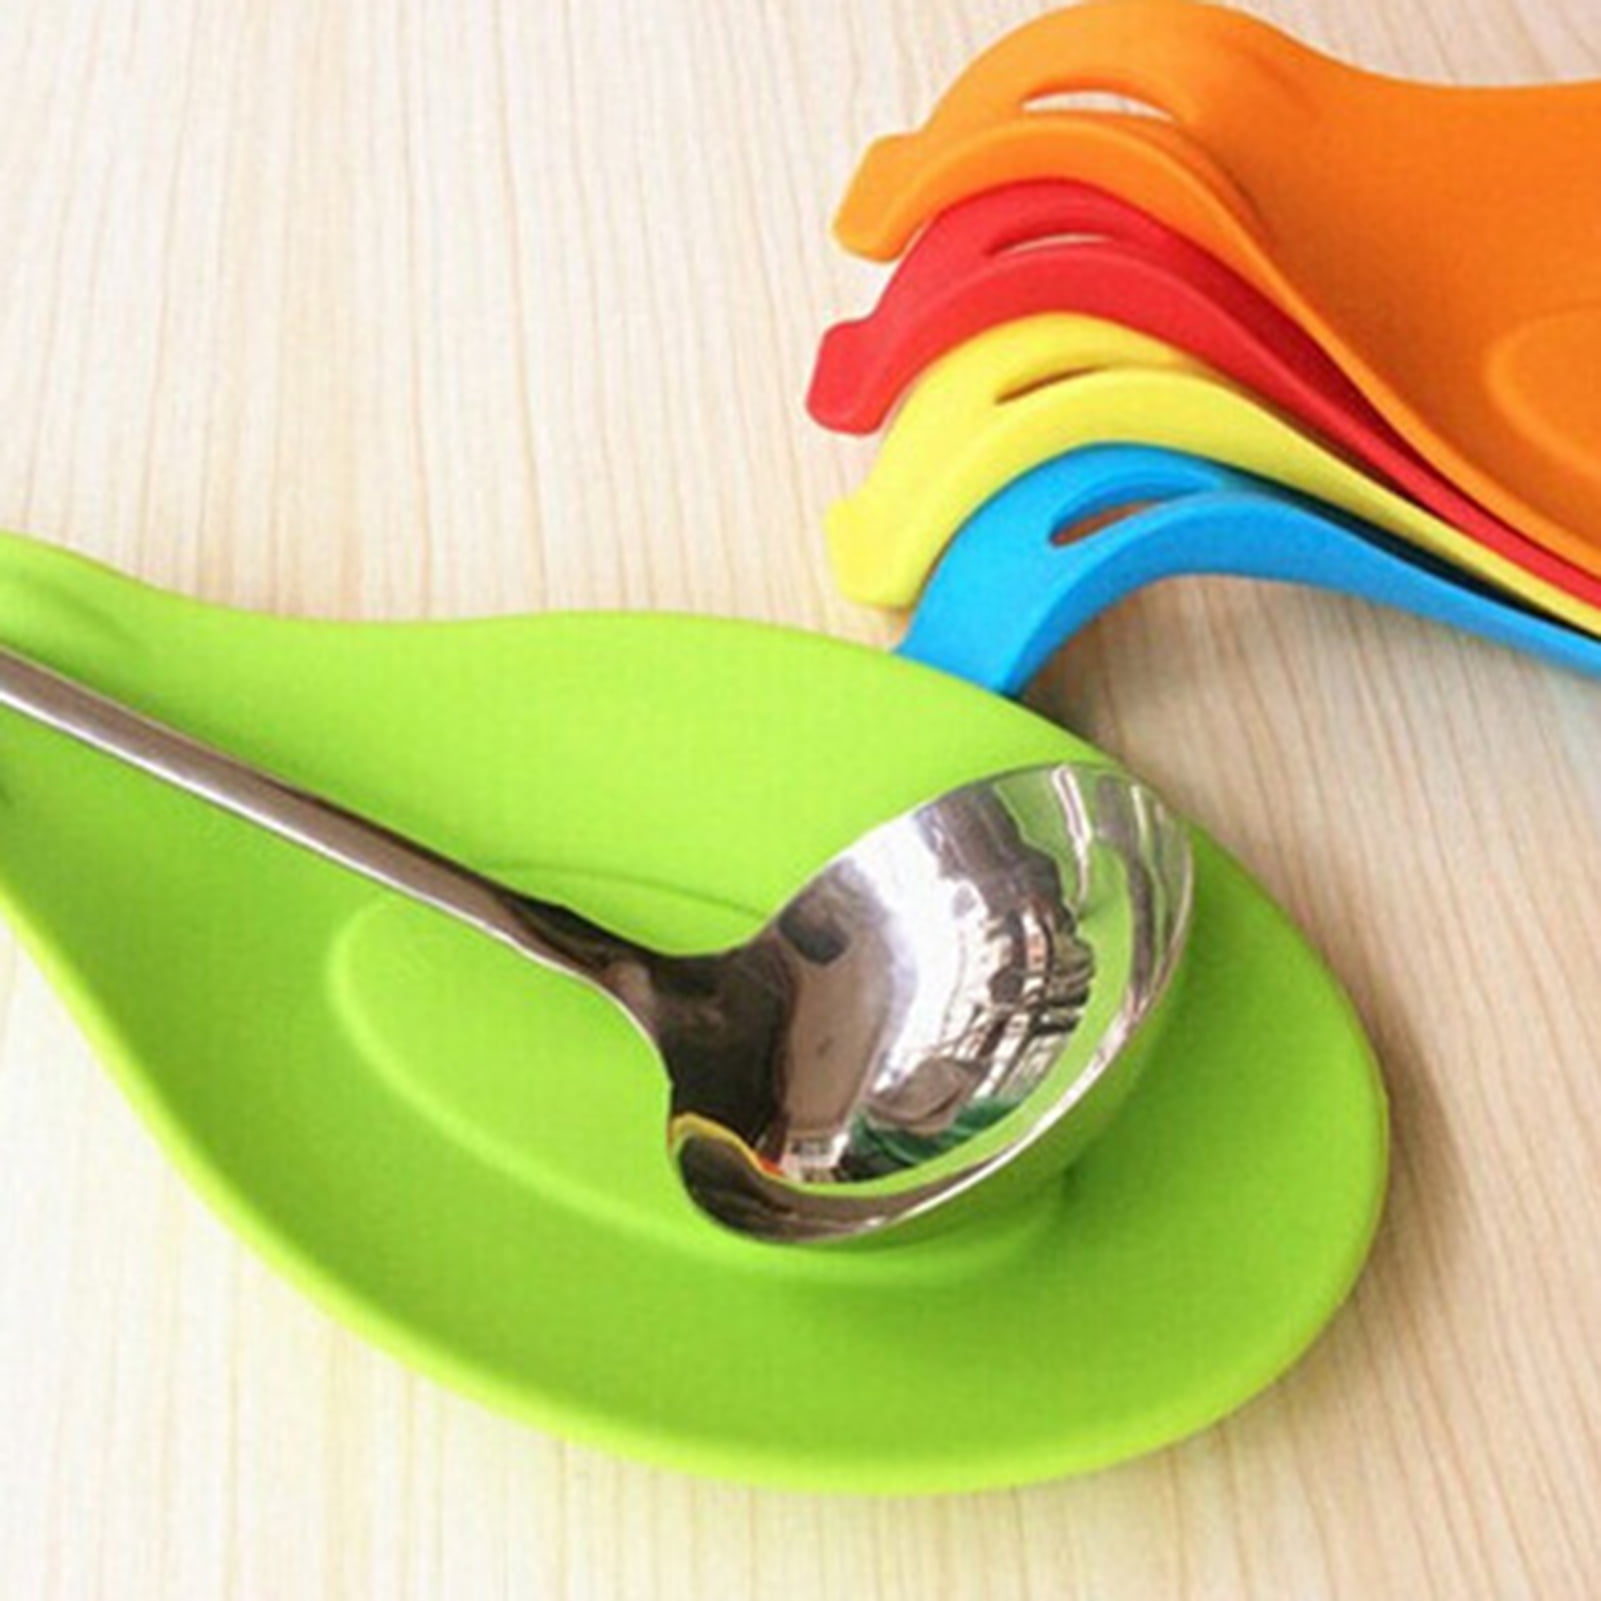 1 Spoon Rest pic color Kitchen Utensil Holder Heat Dishwasher Safe 9.25 x 3.6 “